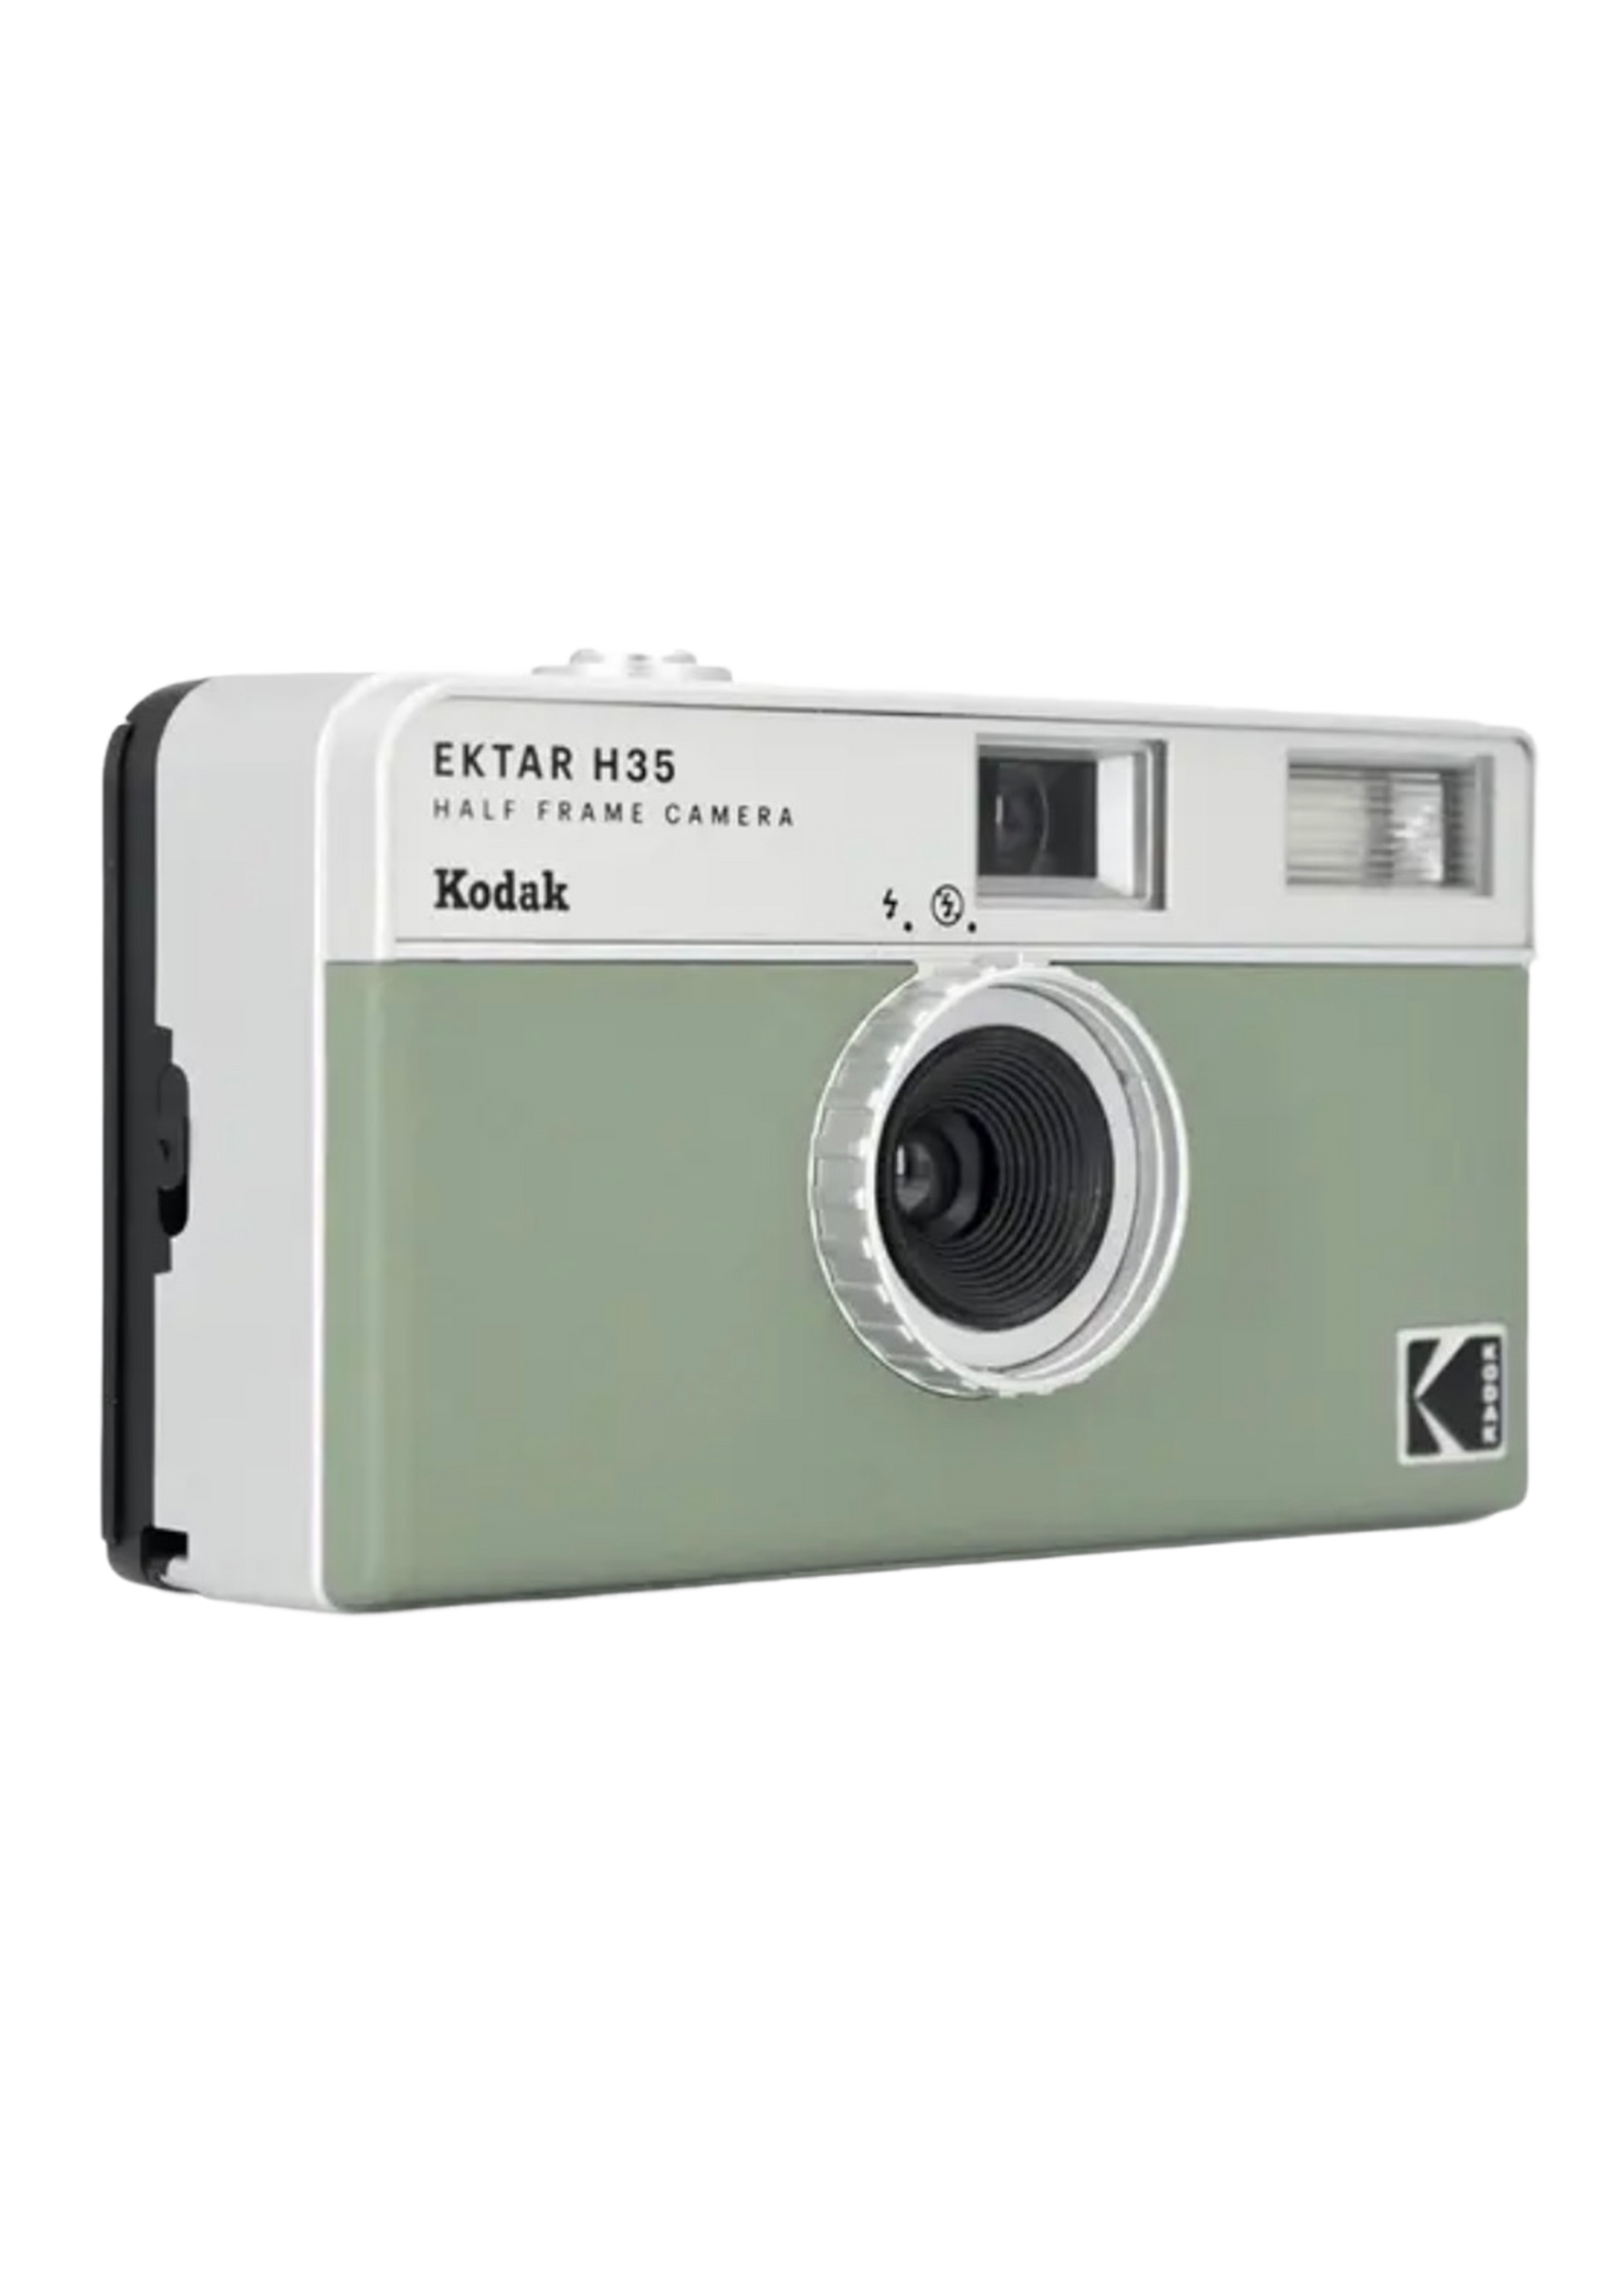 Club Reloadable - Kodak Ektar H35